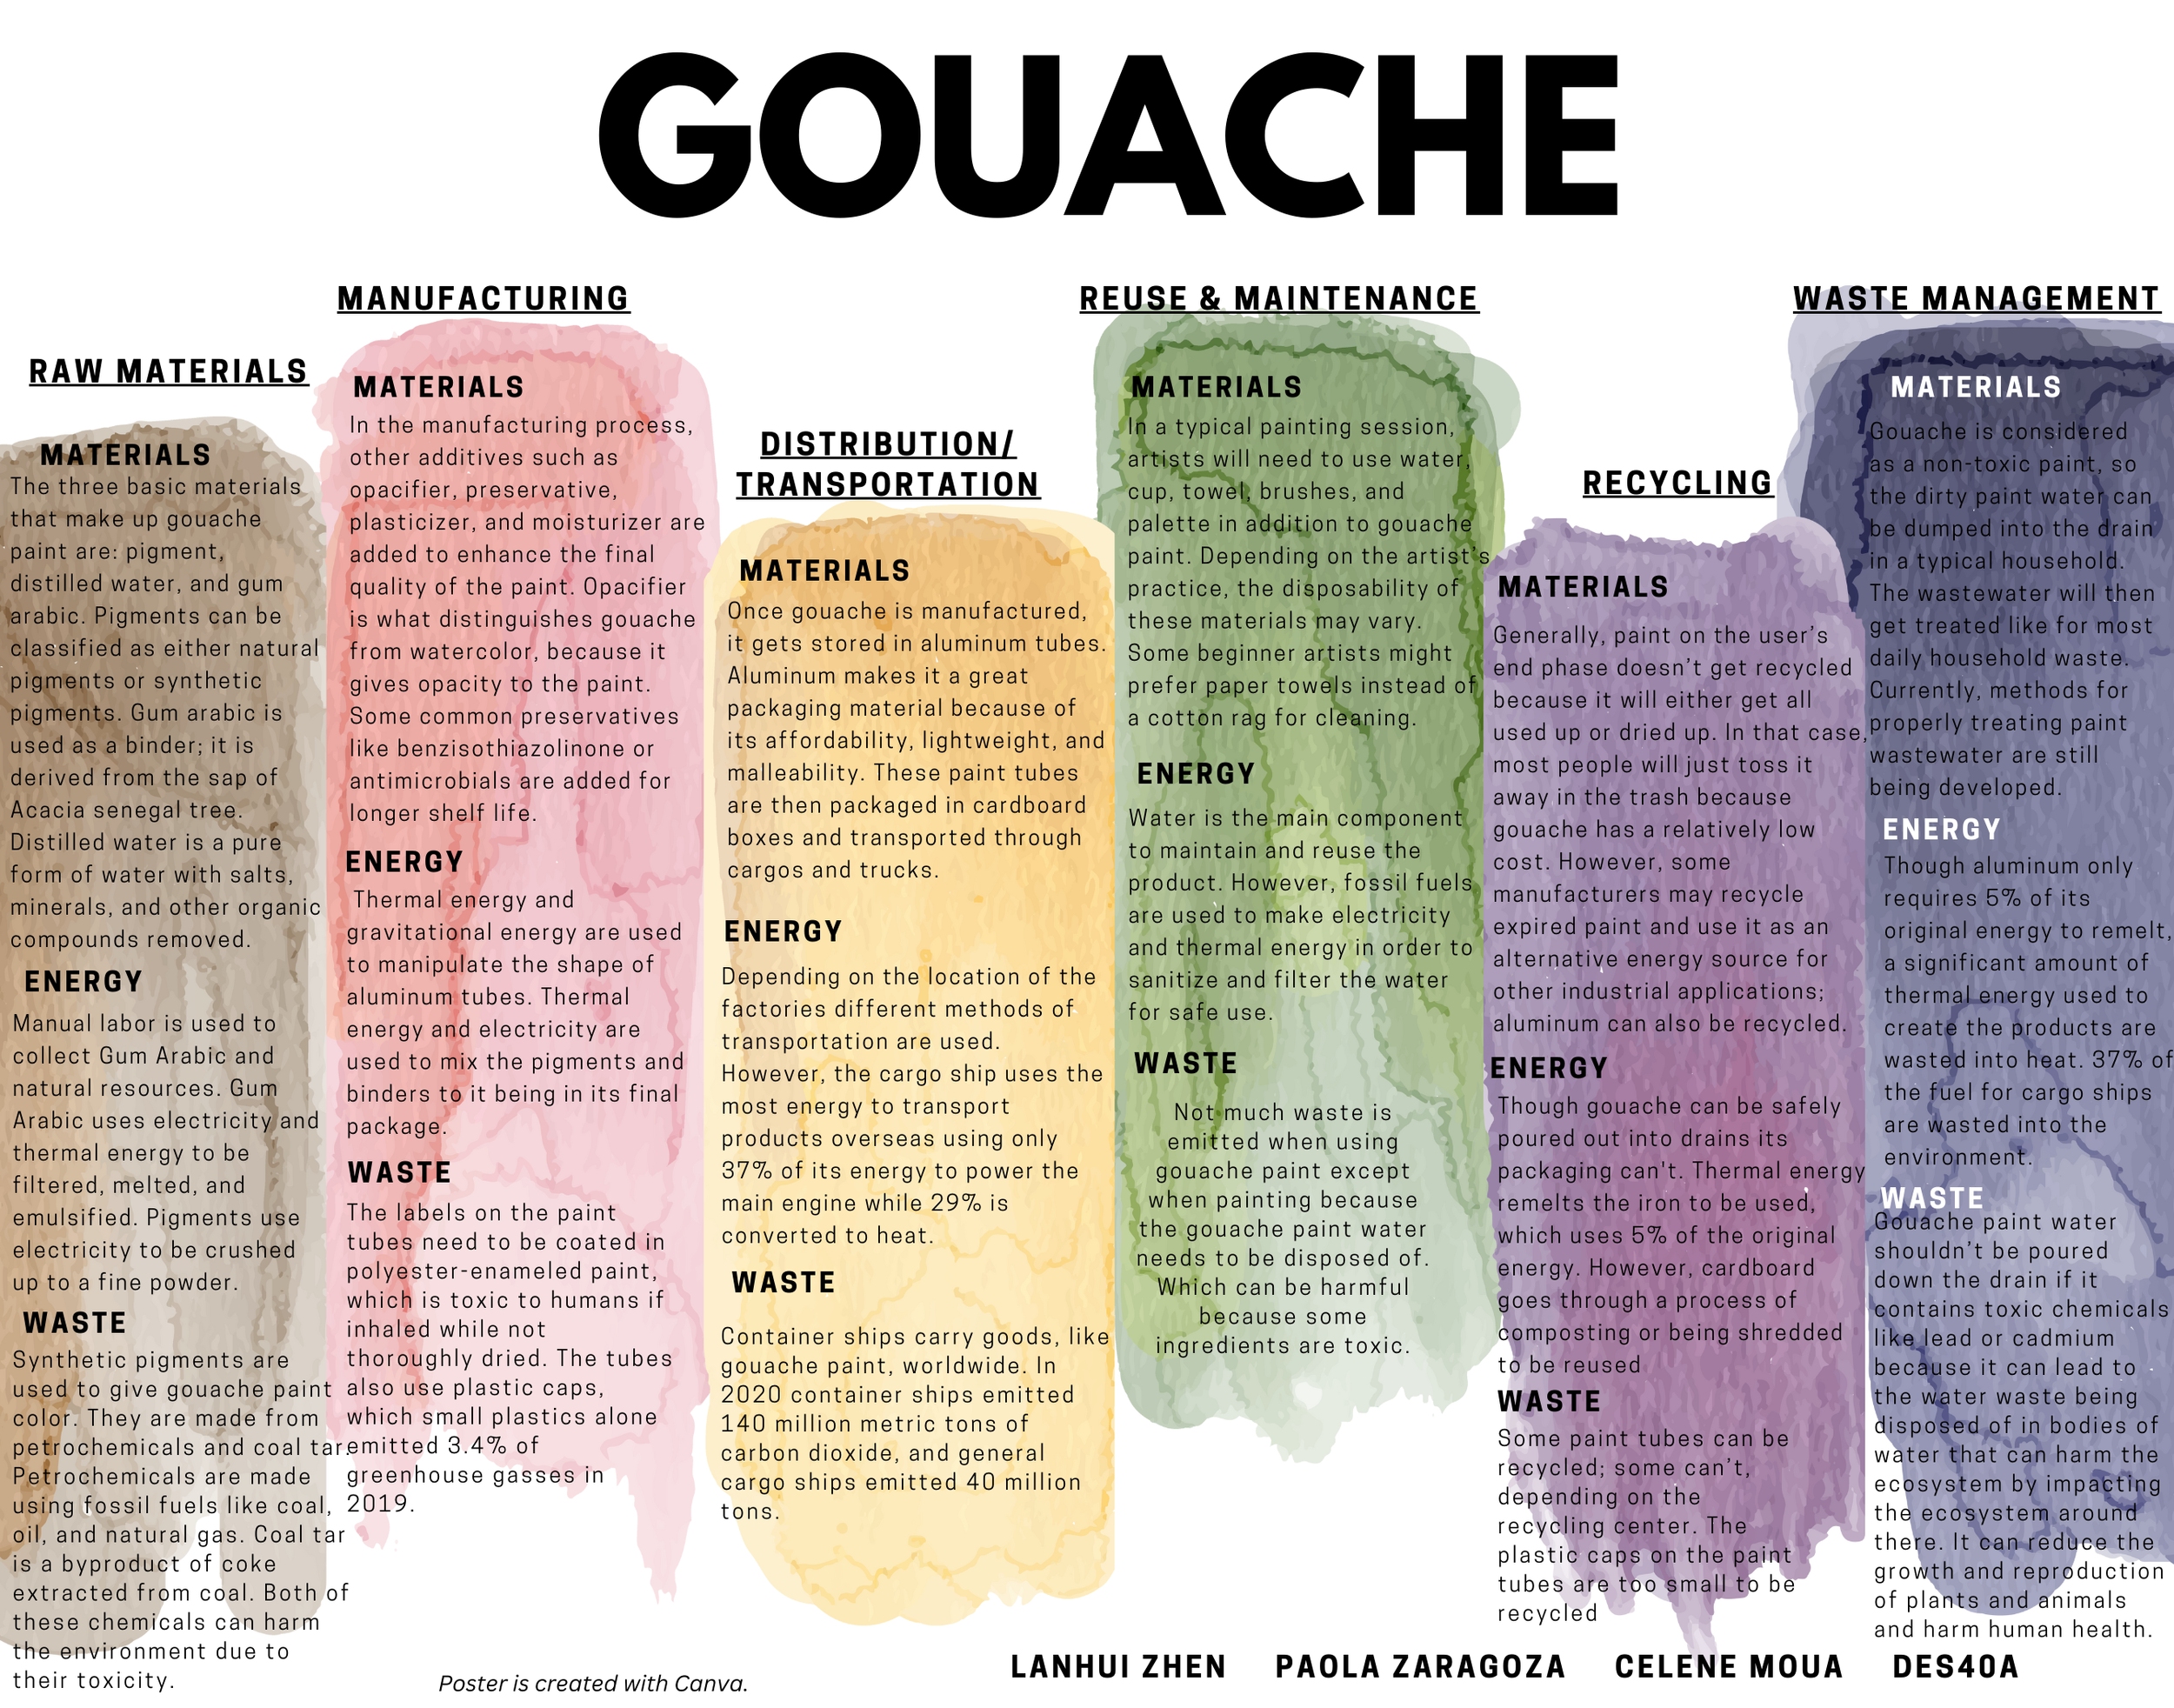 Gouache- not just poster paint